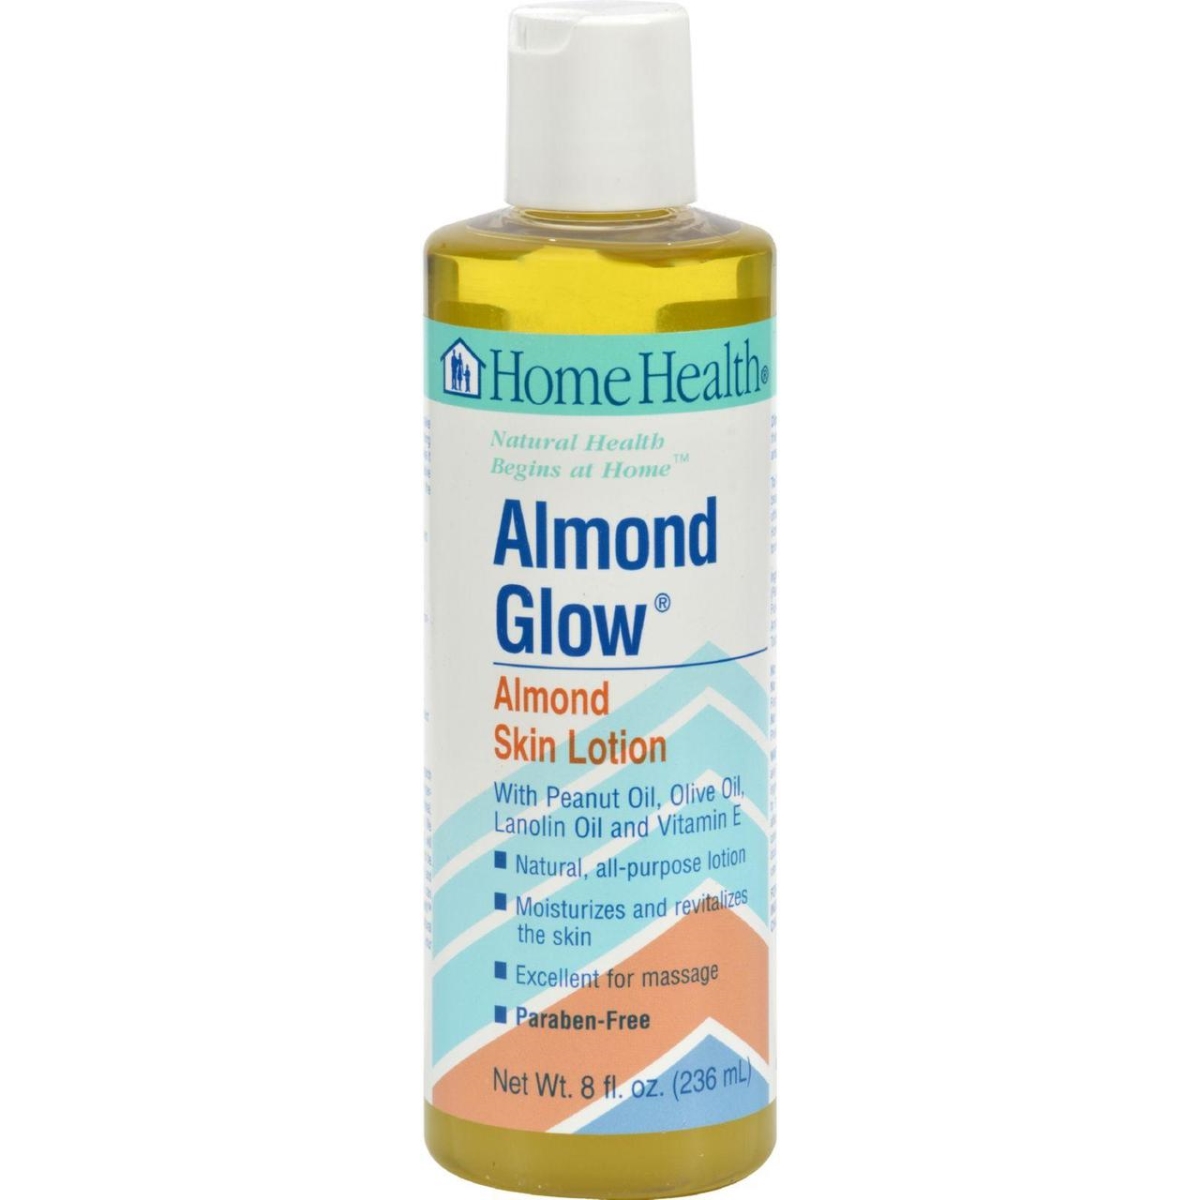 Hg0118281 8 Fl Oz Almond Glow Skin Lotion Fragrance Free